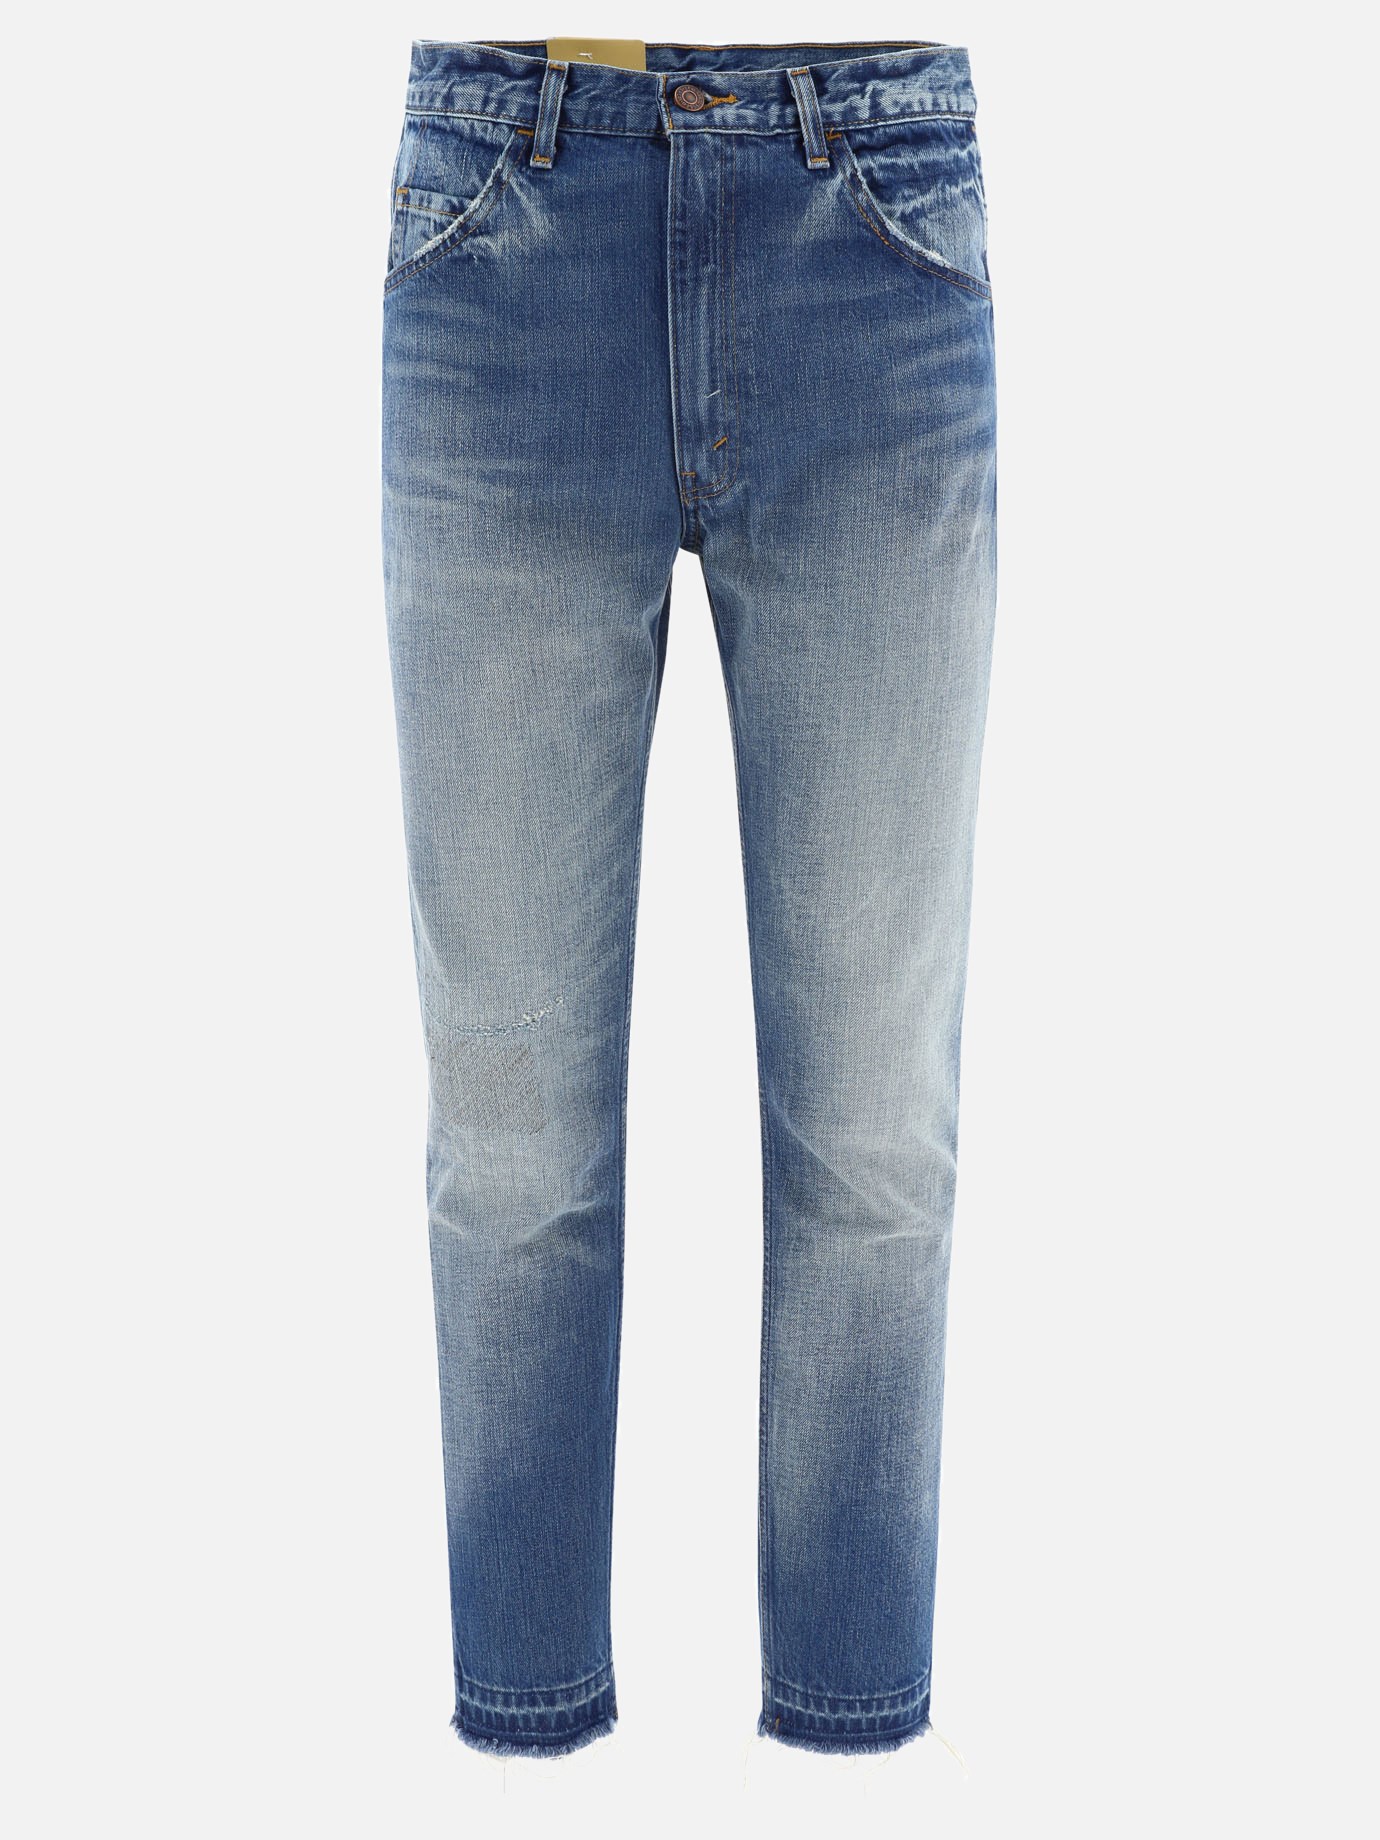 Jeans  Super Slims by Levi's Vintage Clothing - 2